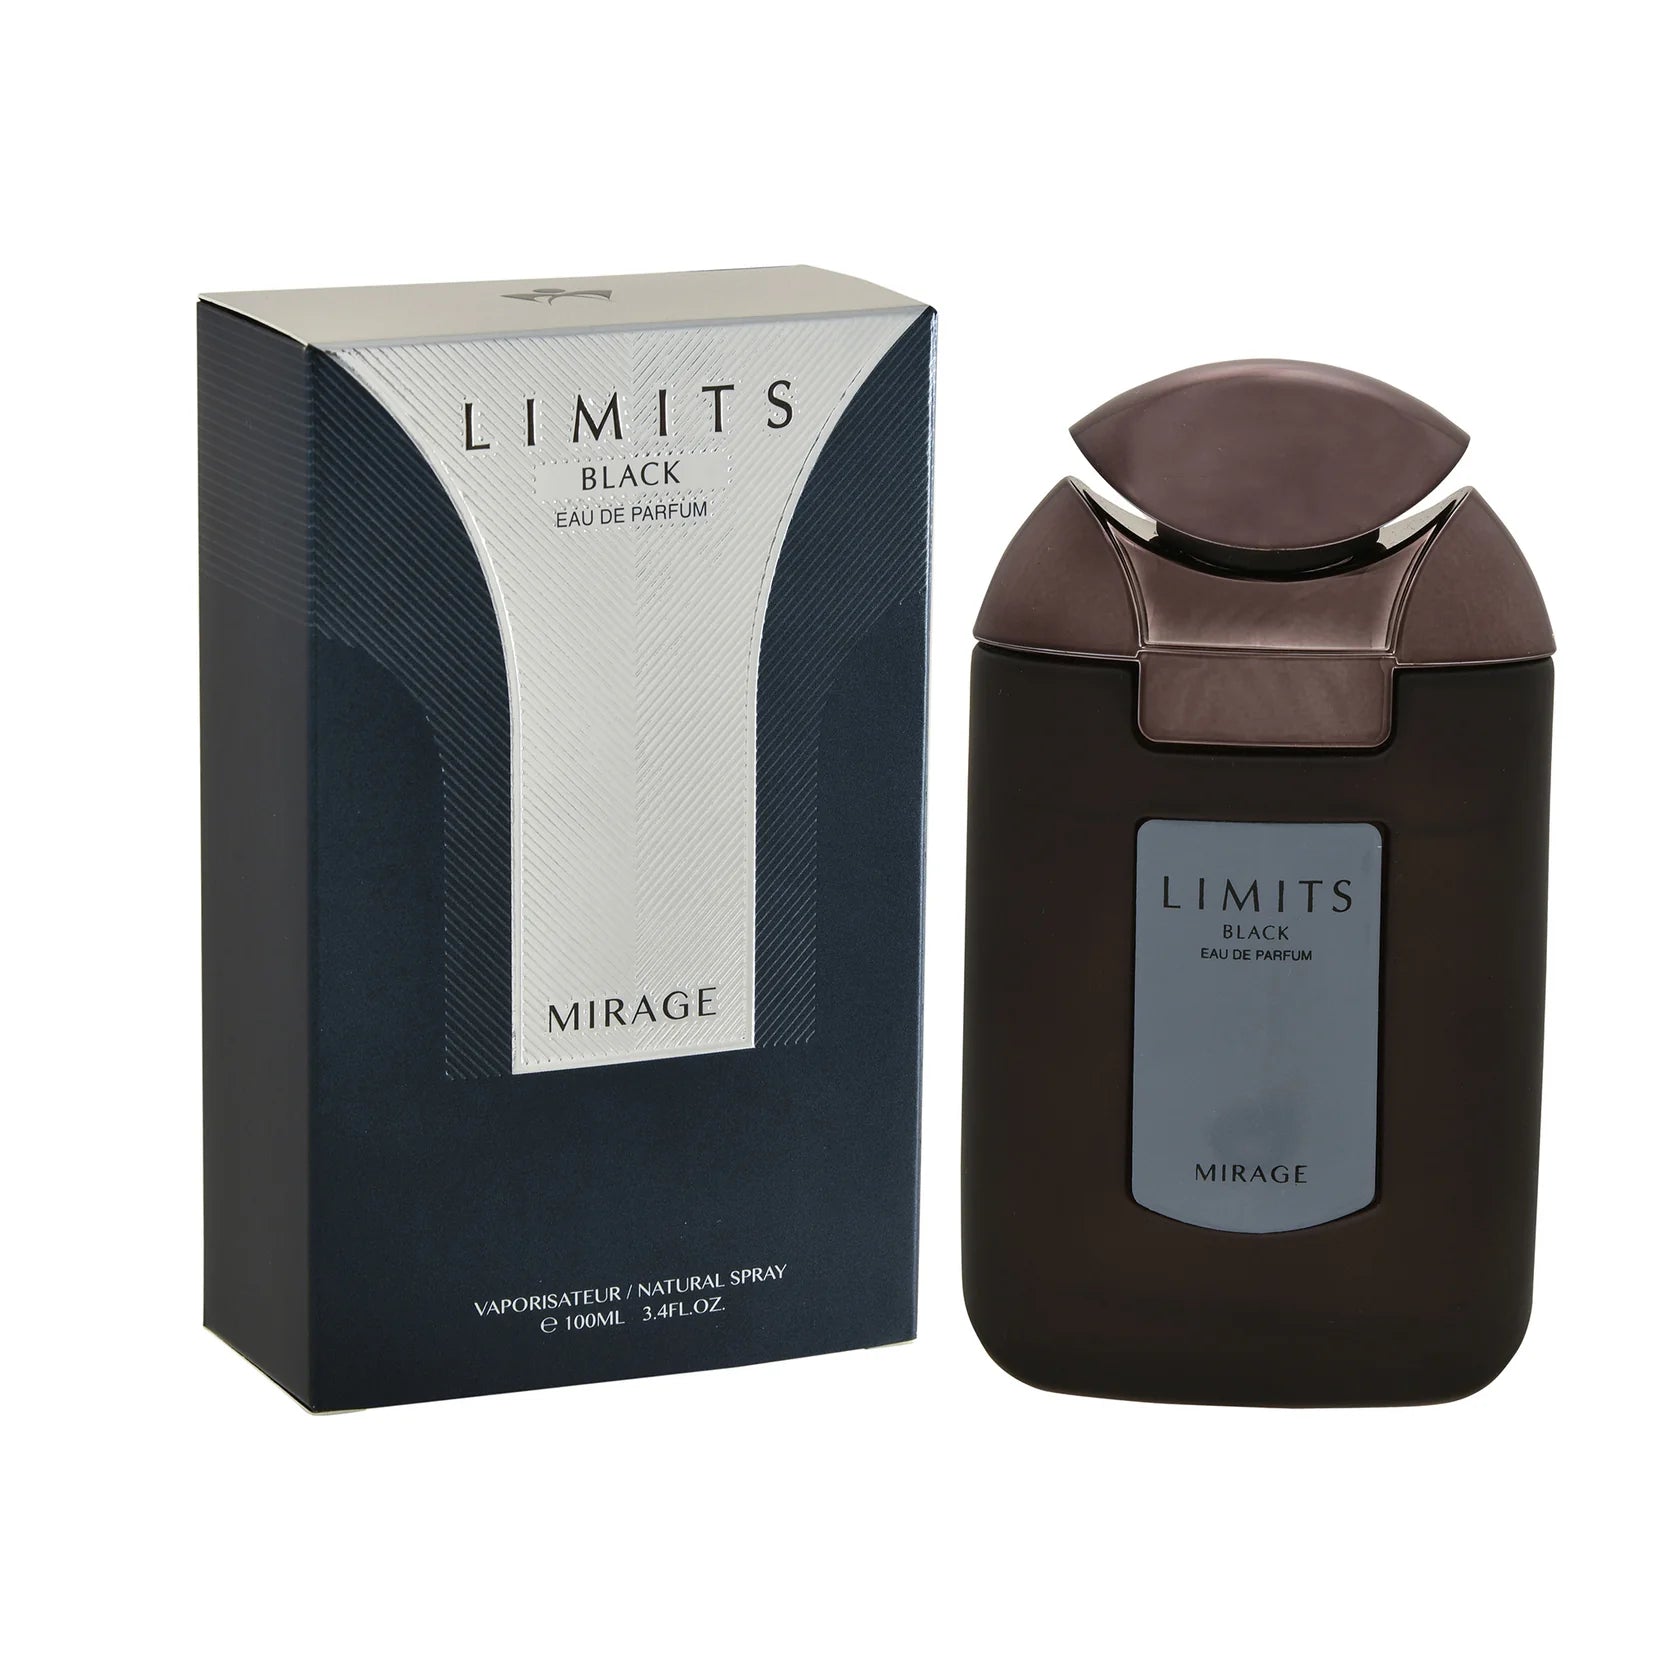 Limits Black EDP (100ml) spray perfume by Mirage Perfumes